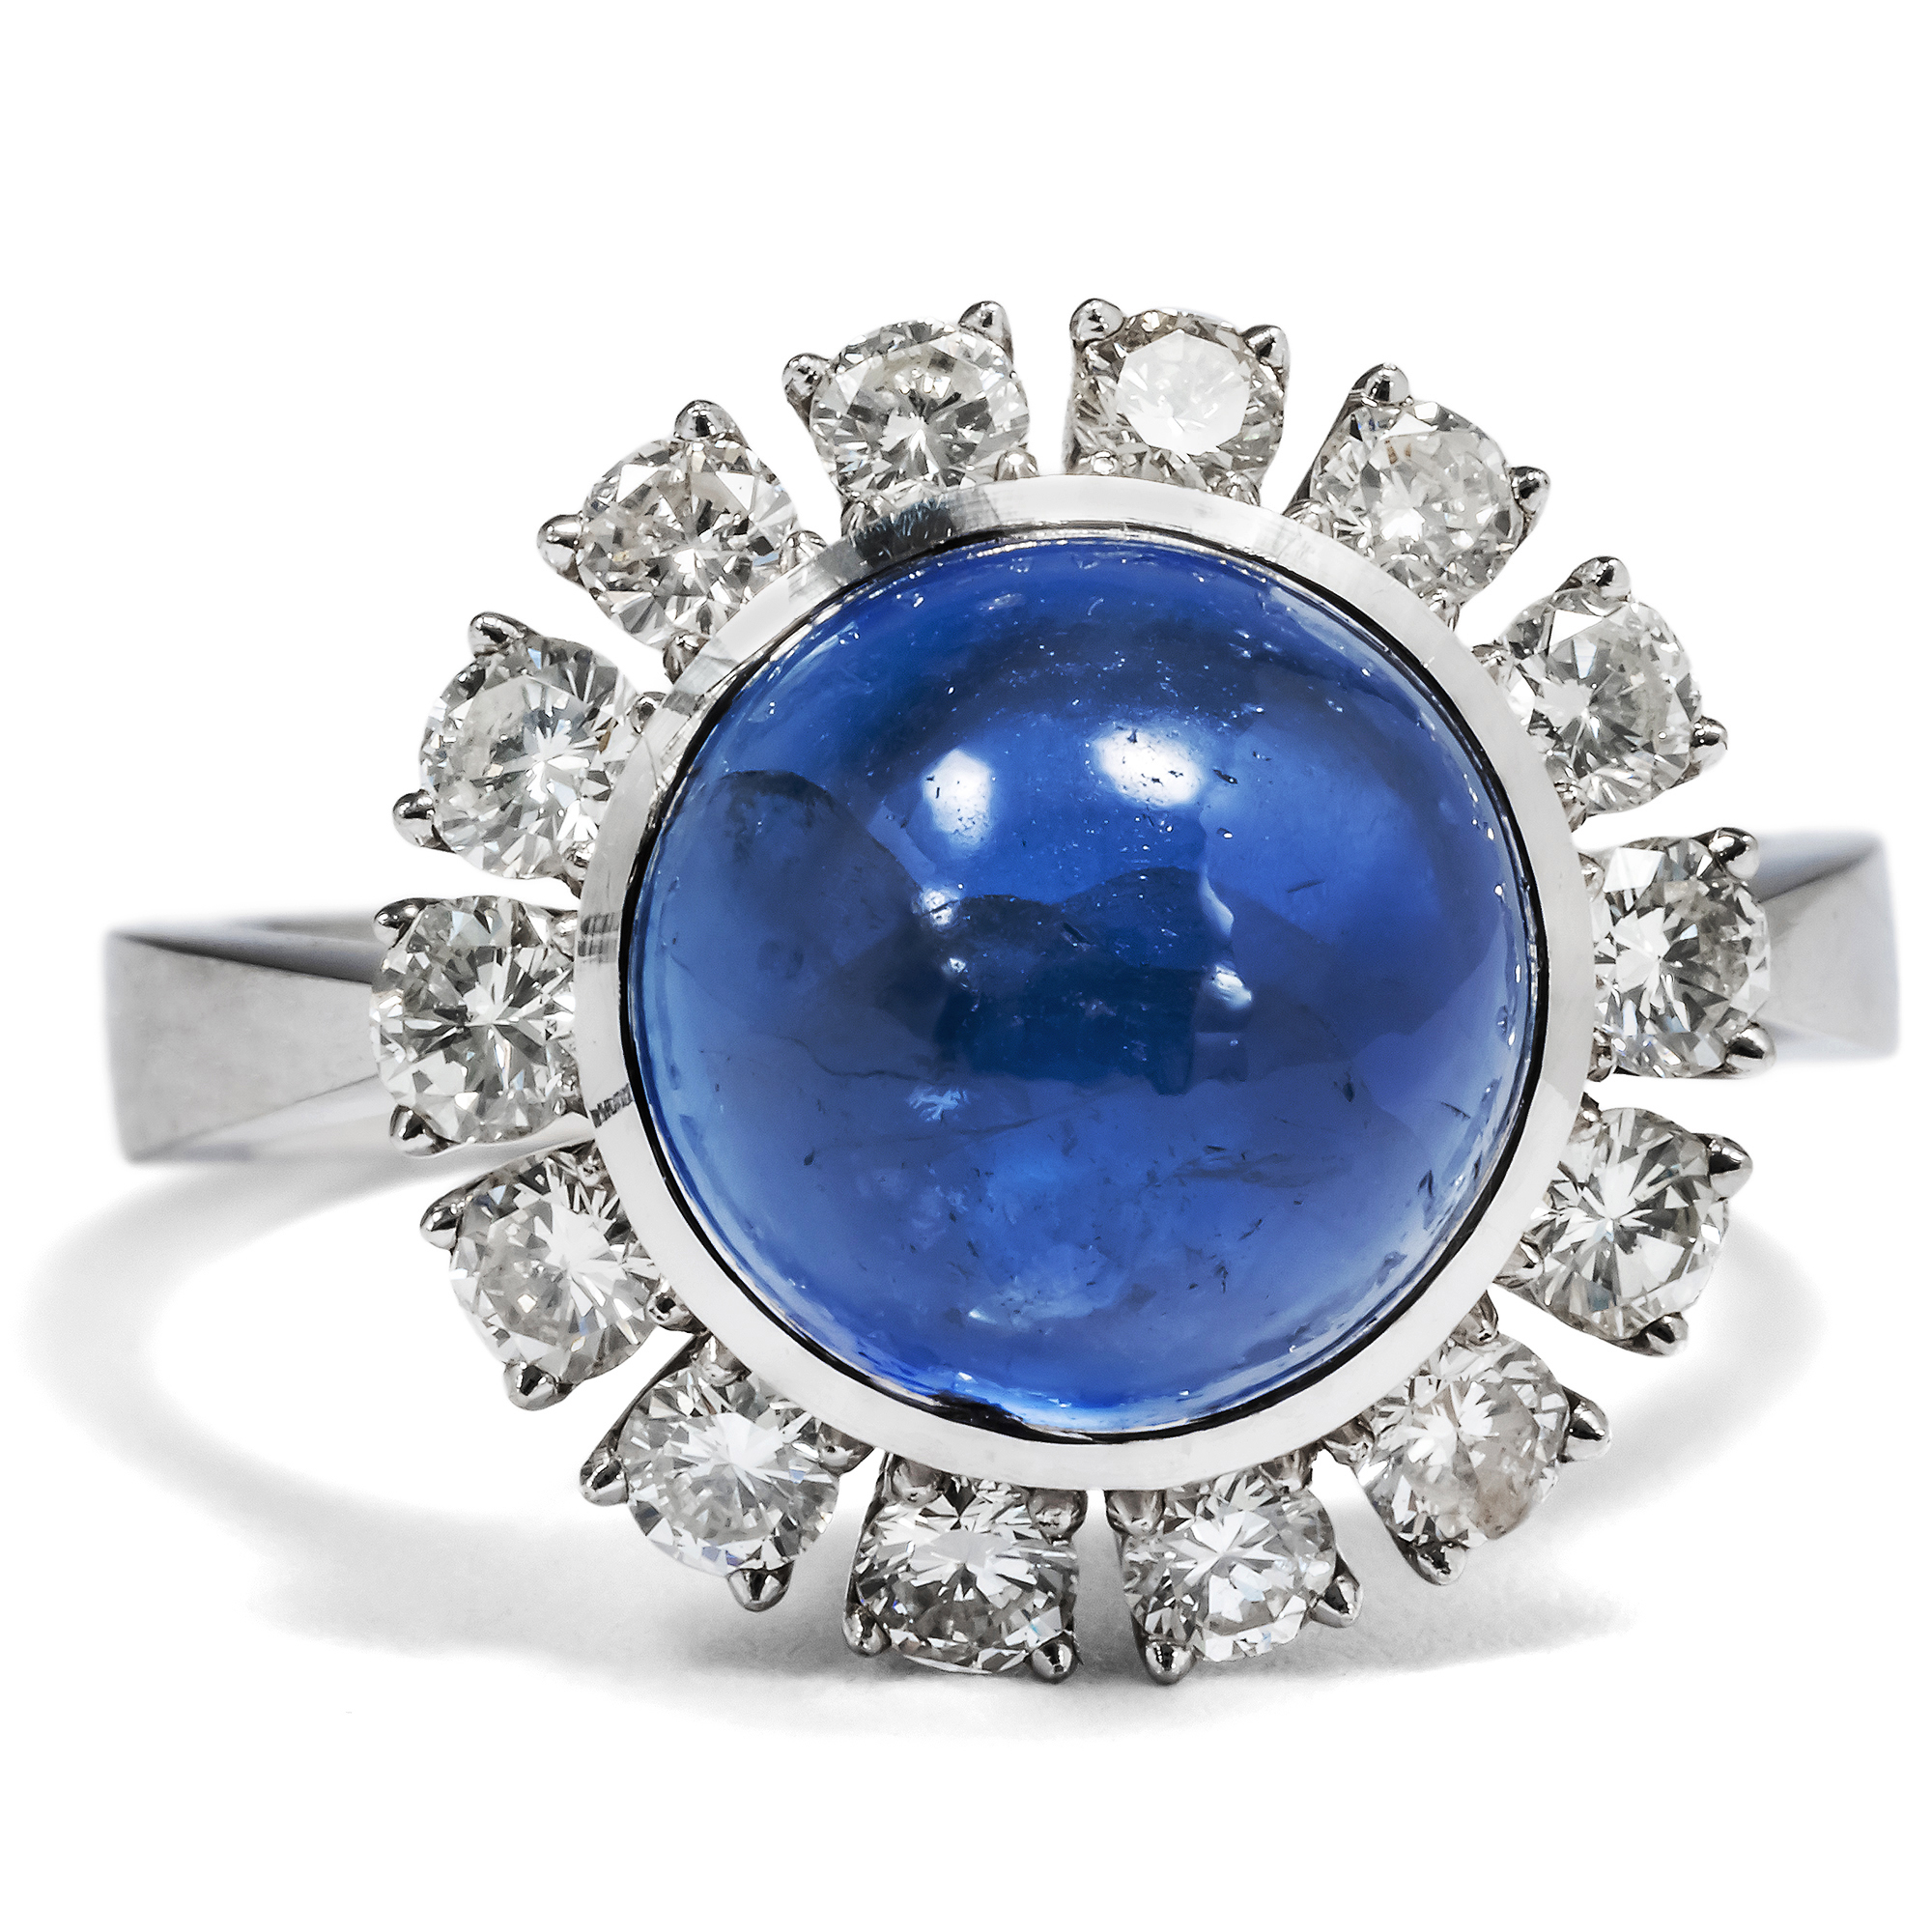 Sparkling Vintage White Gold Ring With Sapphire & Diamonds, Circa 1970